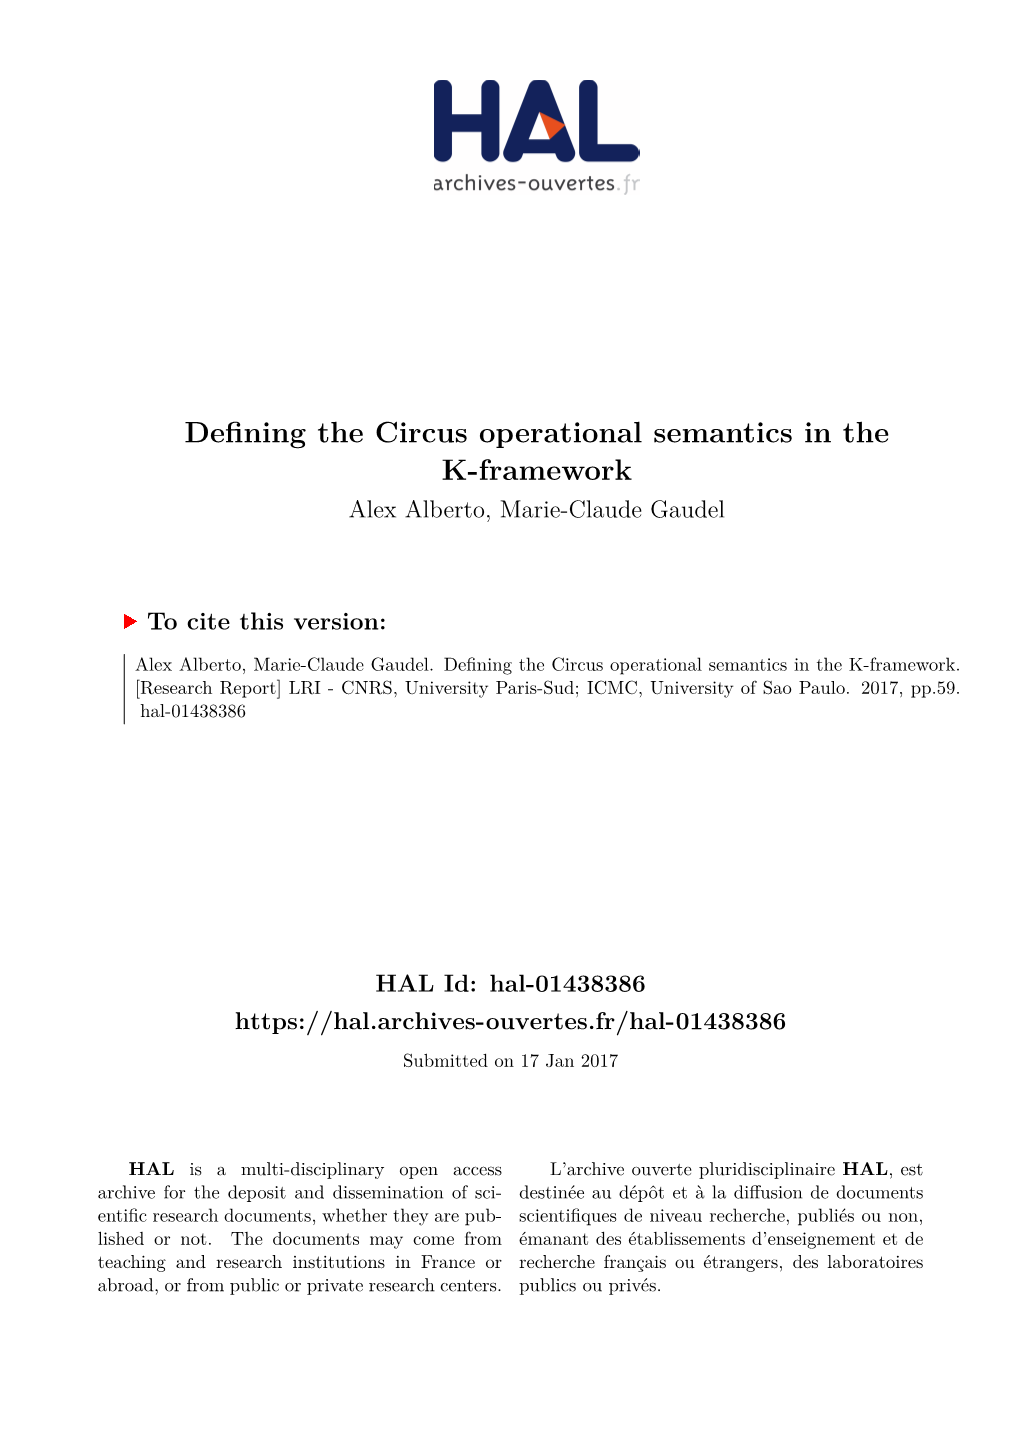 Defining the Circus Operational Semantics in the K-Framework